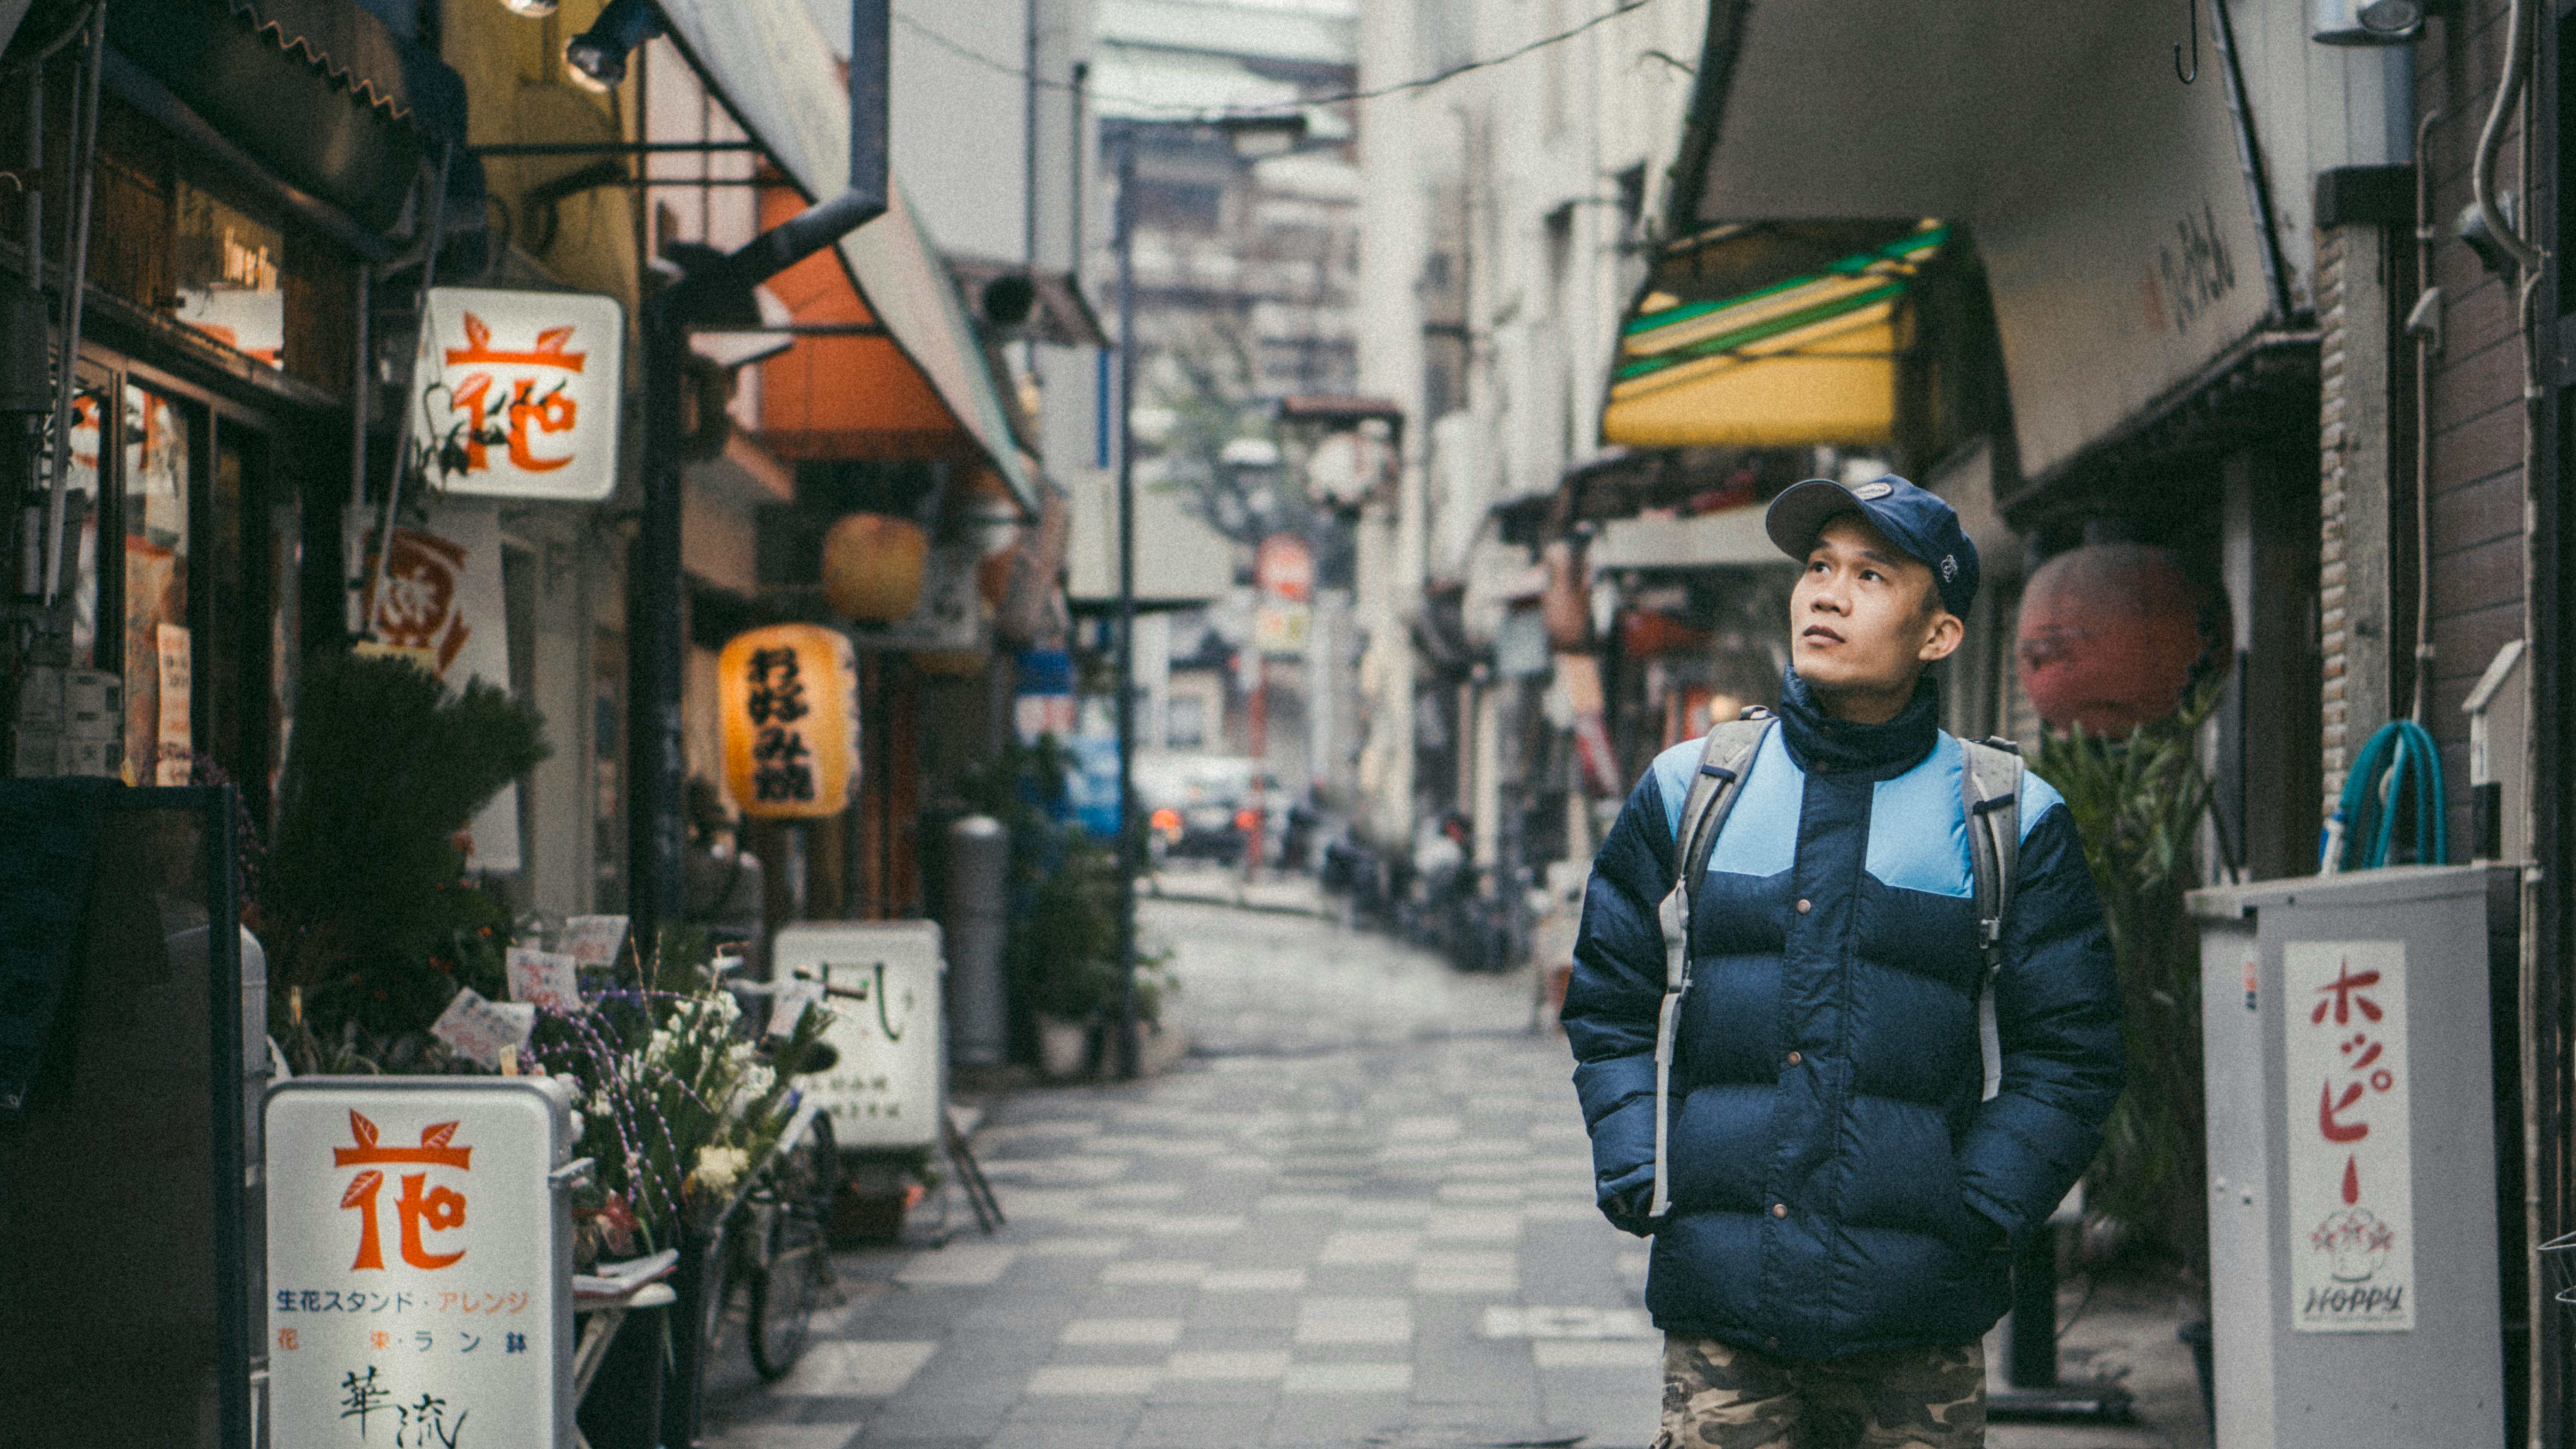 A man walks down a narrow Japanese street